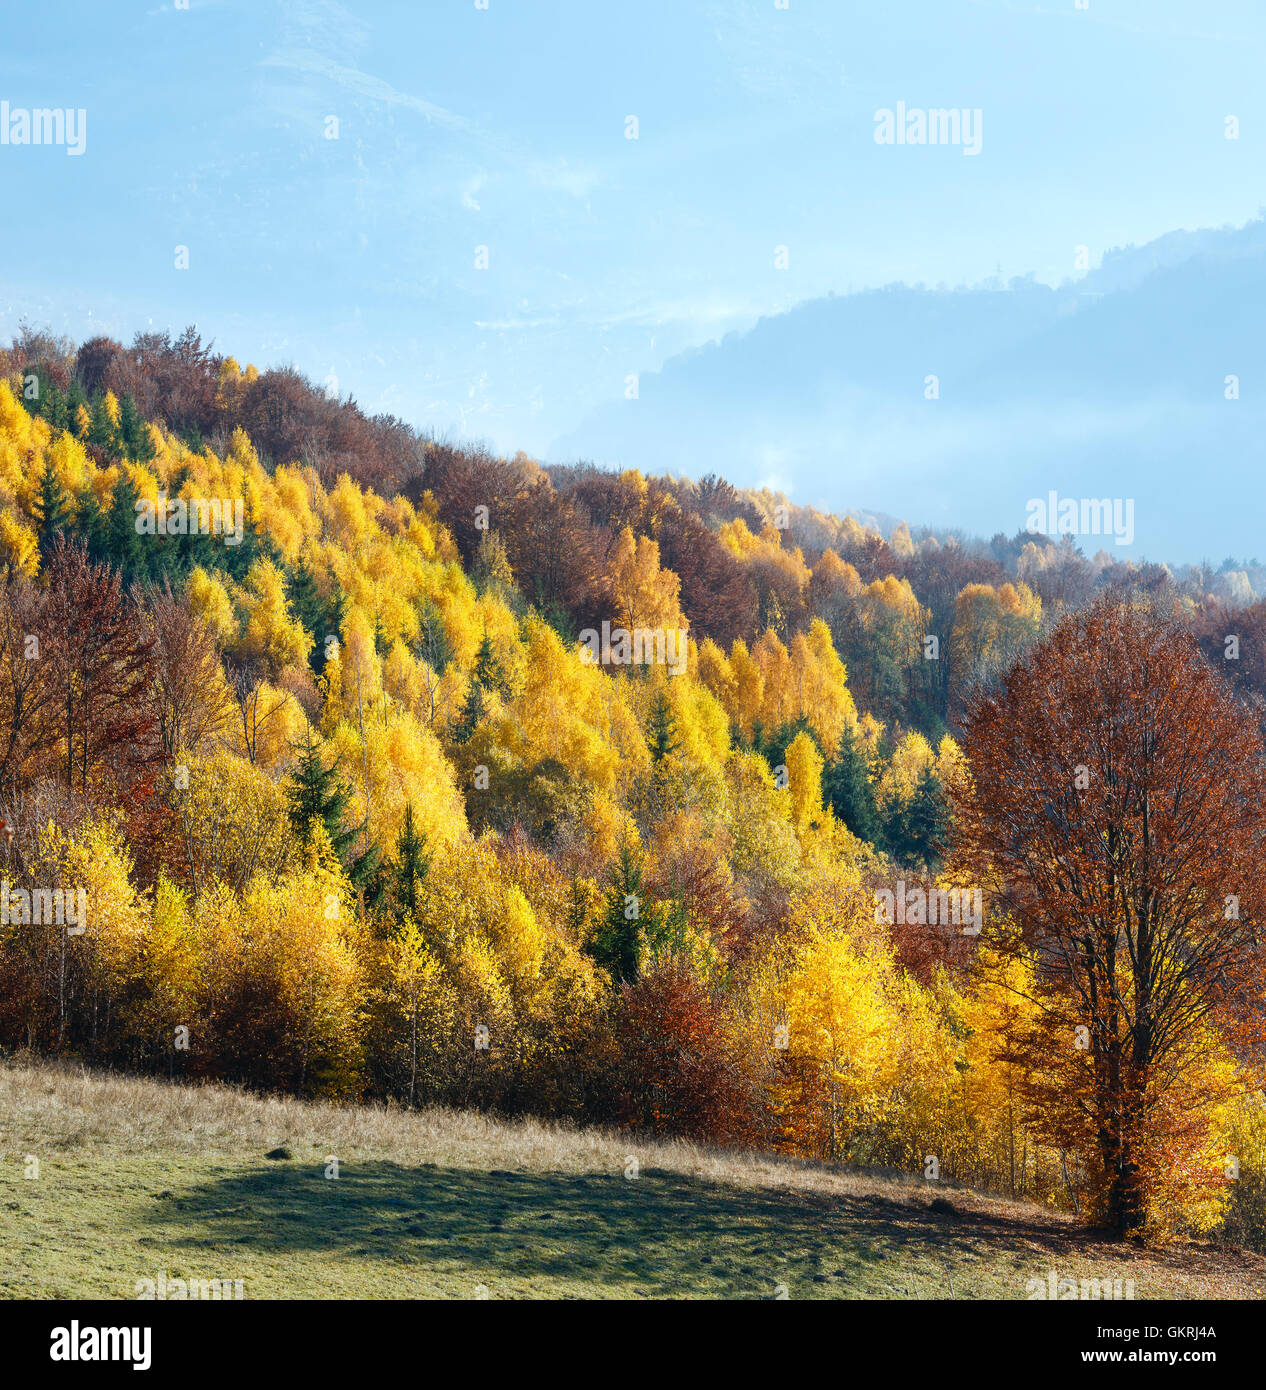 Autumn misty mountain view with yellow foliage of birch trees on slope. Stock Photo